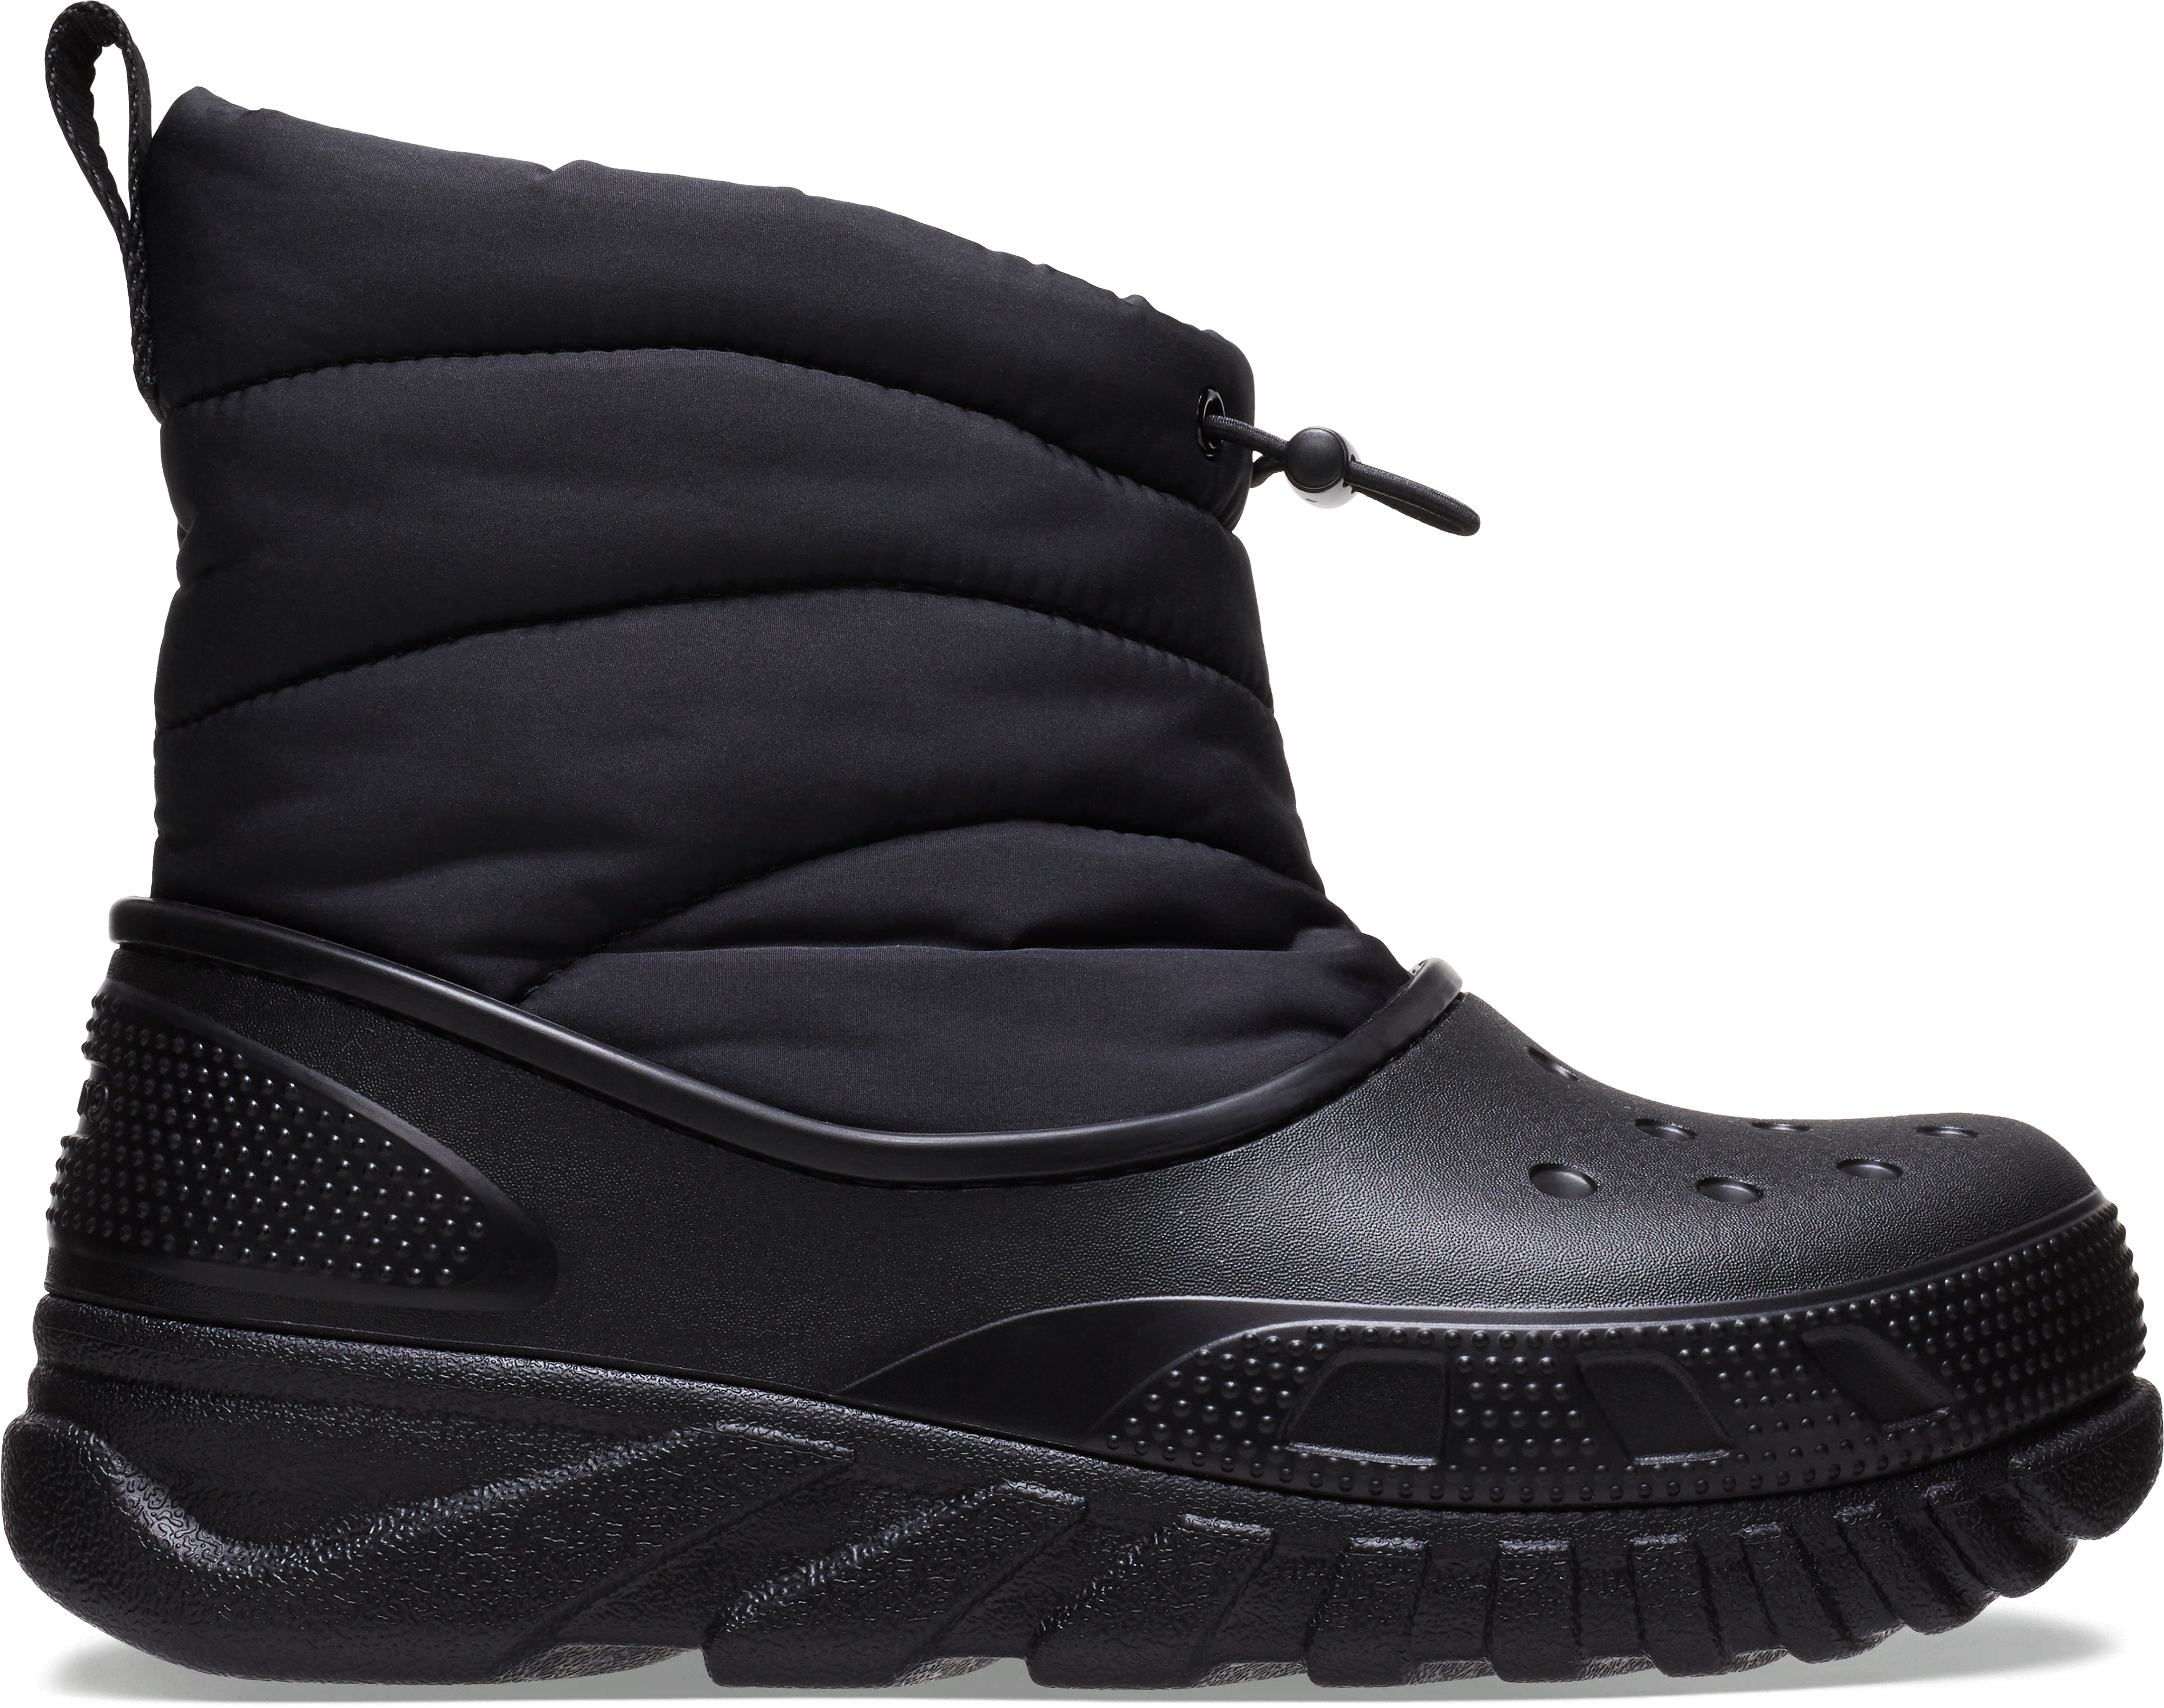 Crocs | Unisex | Duet Max Boot | Boots | Black | W5/M4